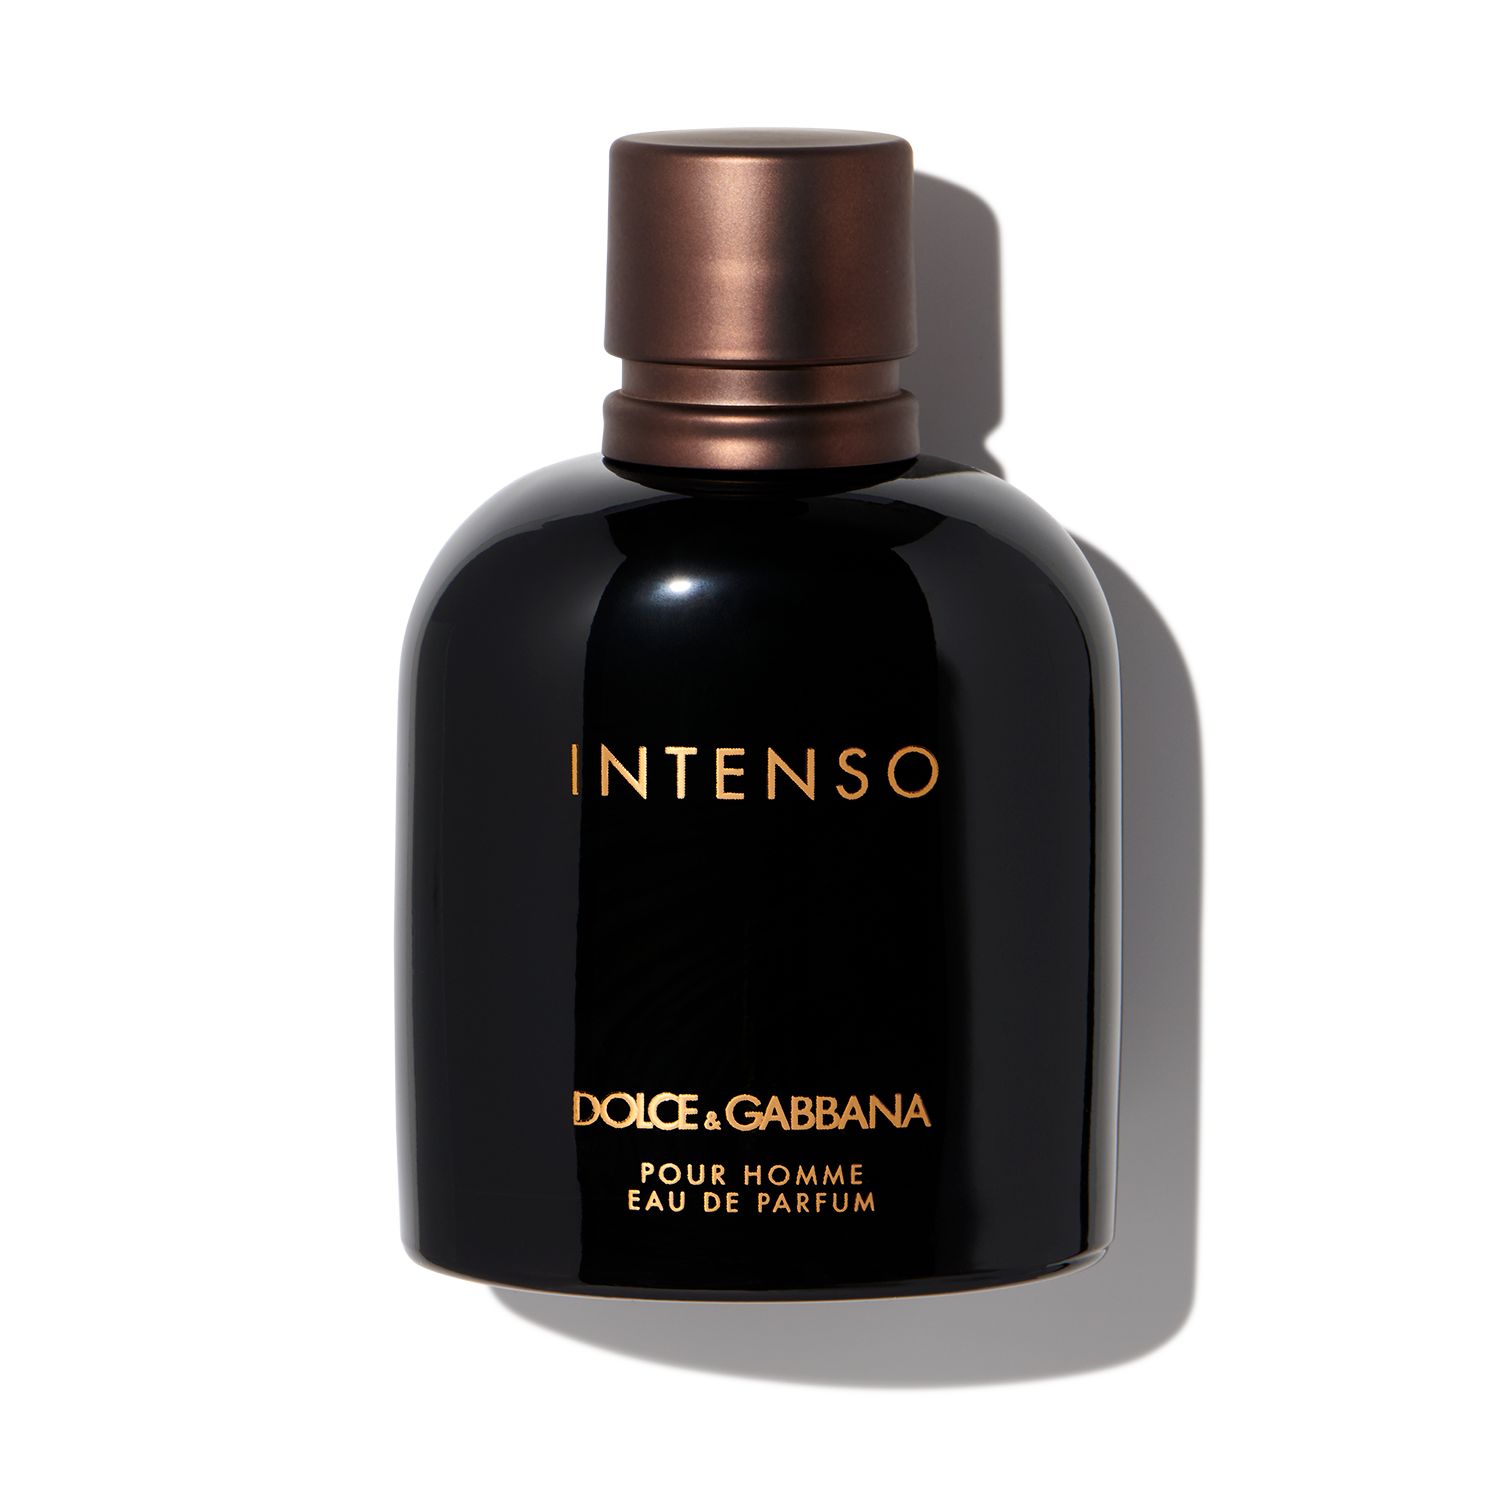 Intenso EDP by Dolce & Gabbana $/month | Scentbird